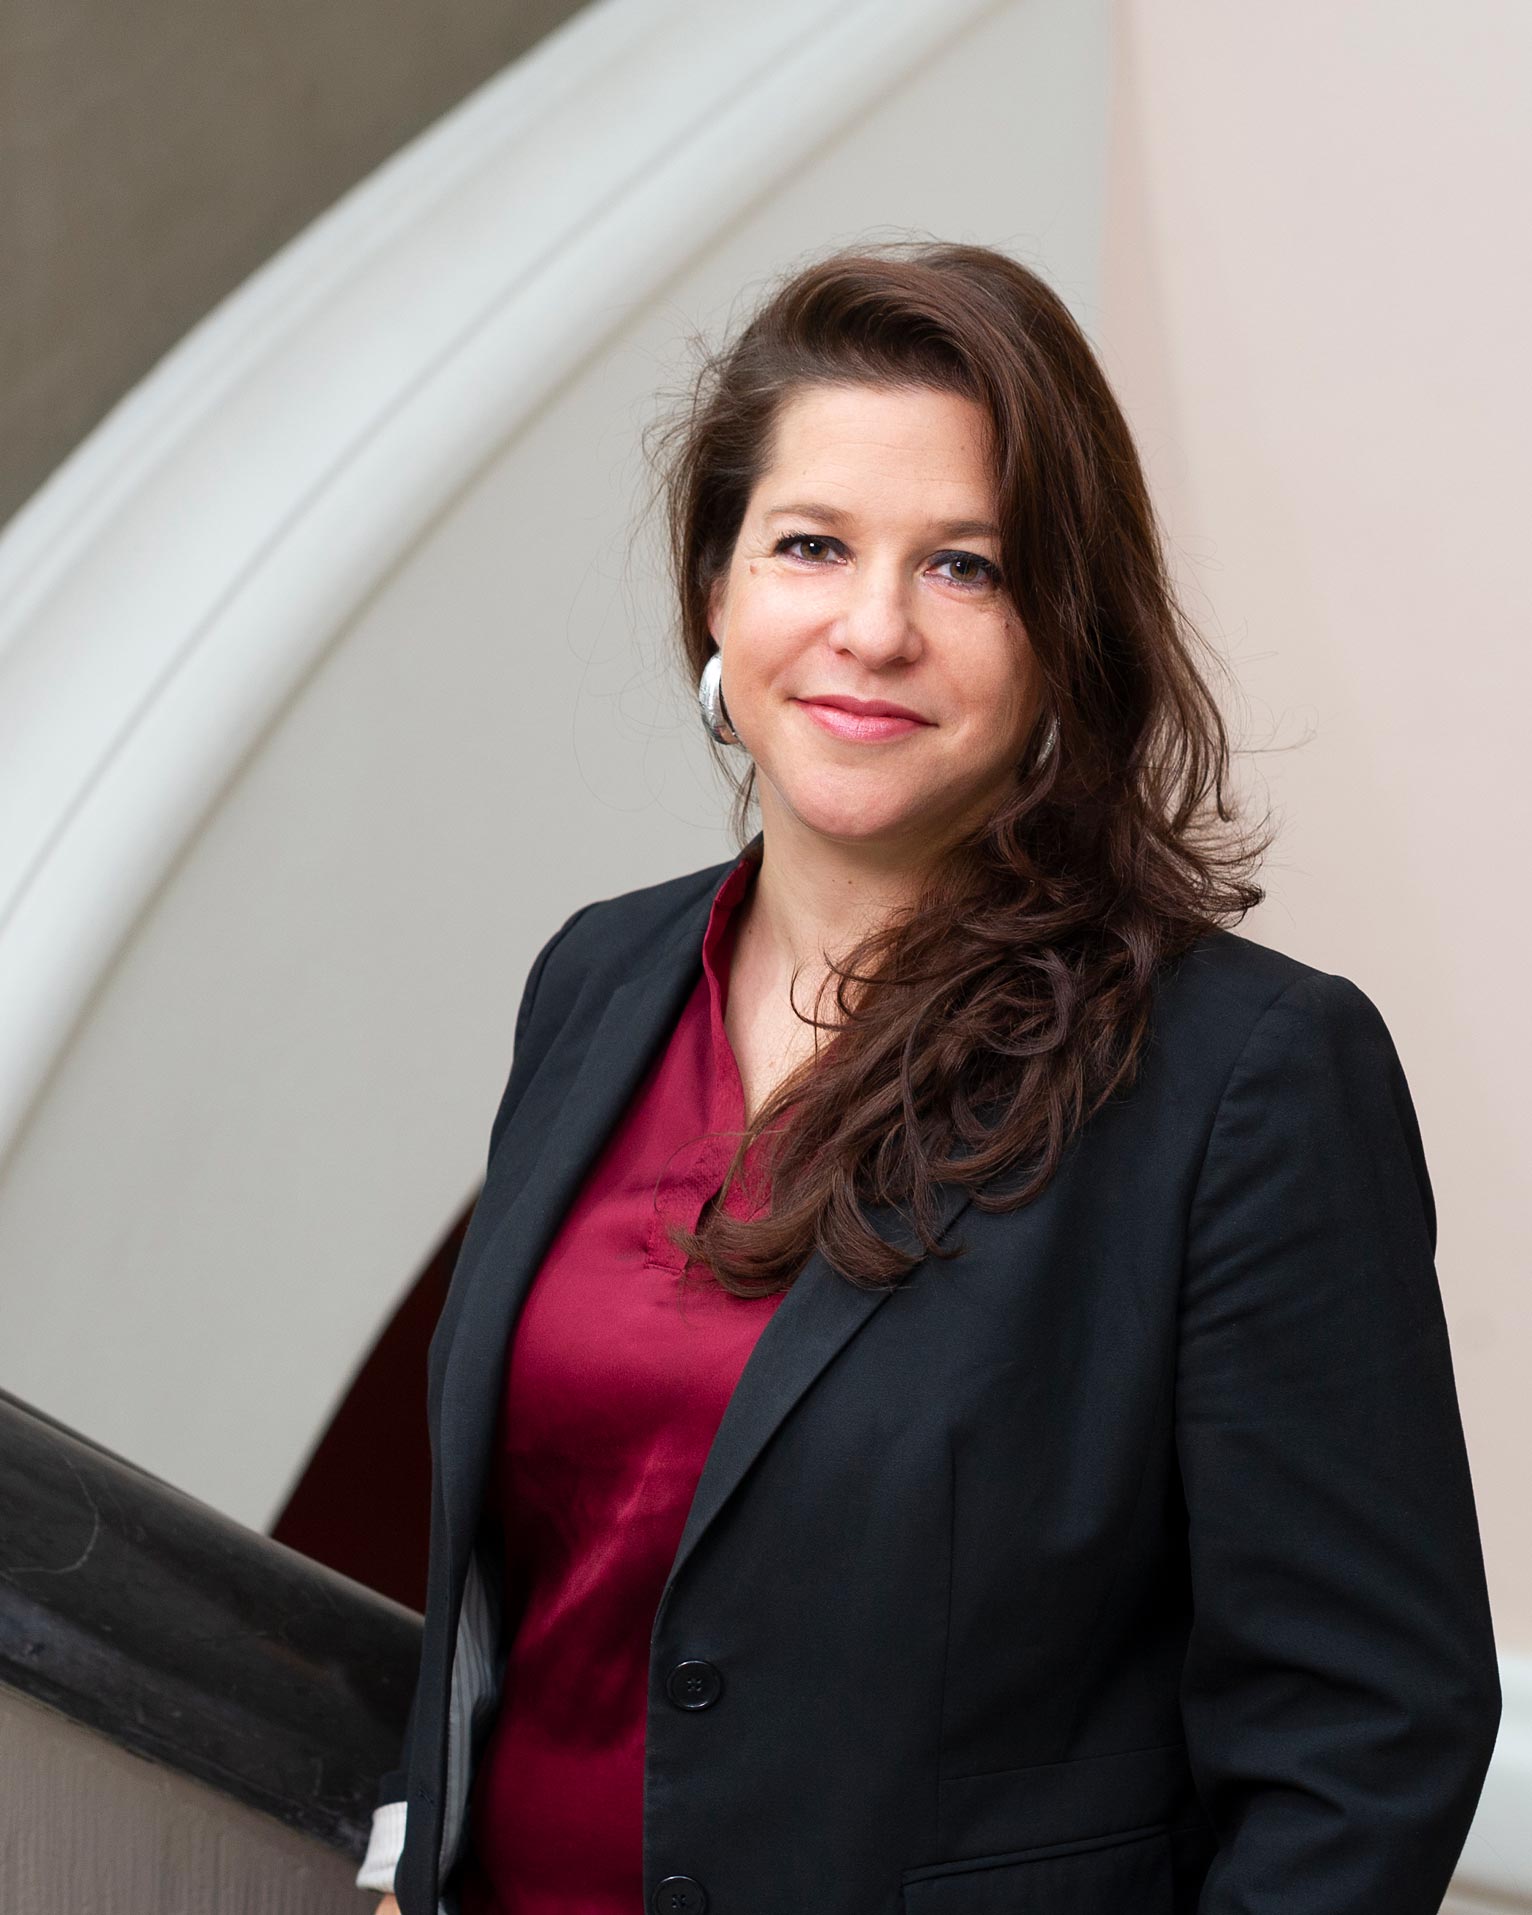 Dina Pomeranz is UBS Foundation Assistant Professor of Applied Economics at the Department of Economics, University of Zurich